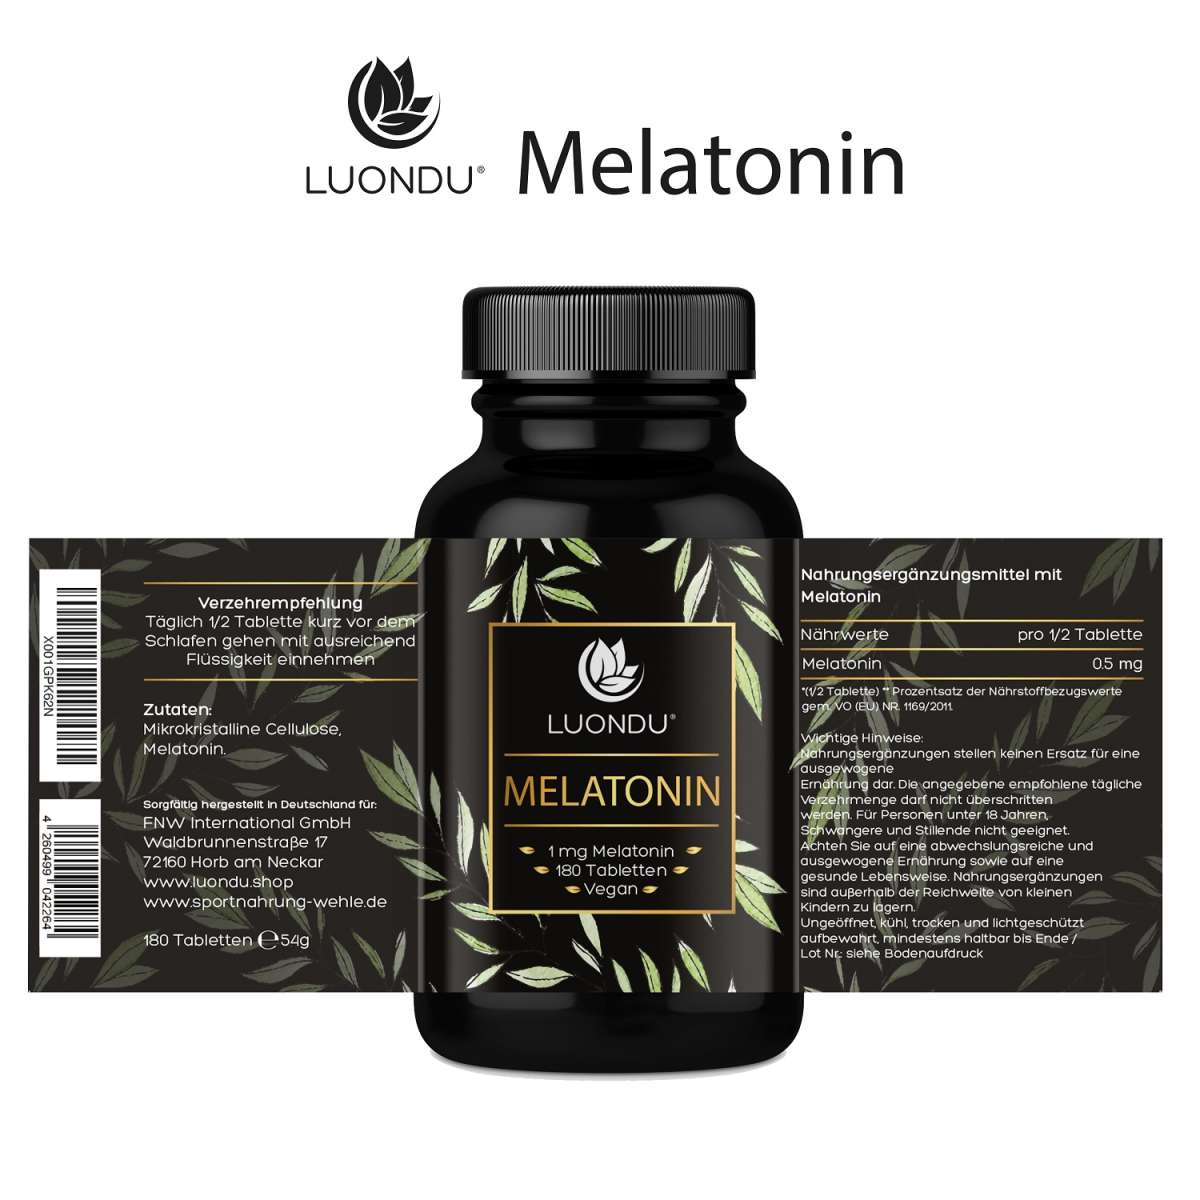 Luondu Melatonin 1mg pro Tablette - 180 Sleep Tabletten